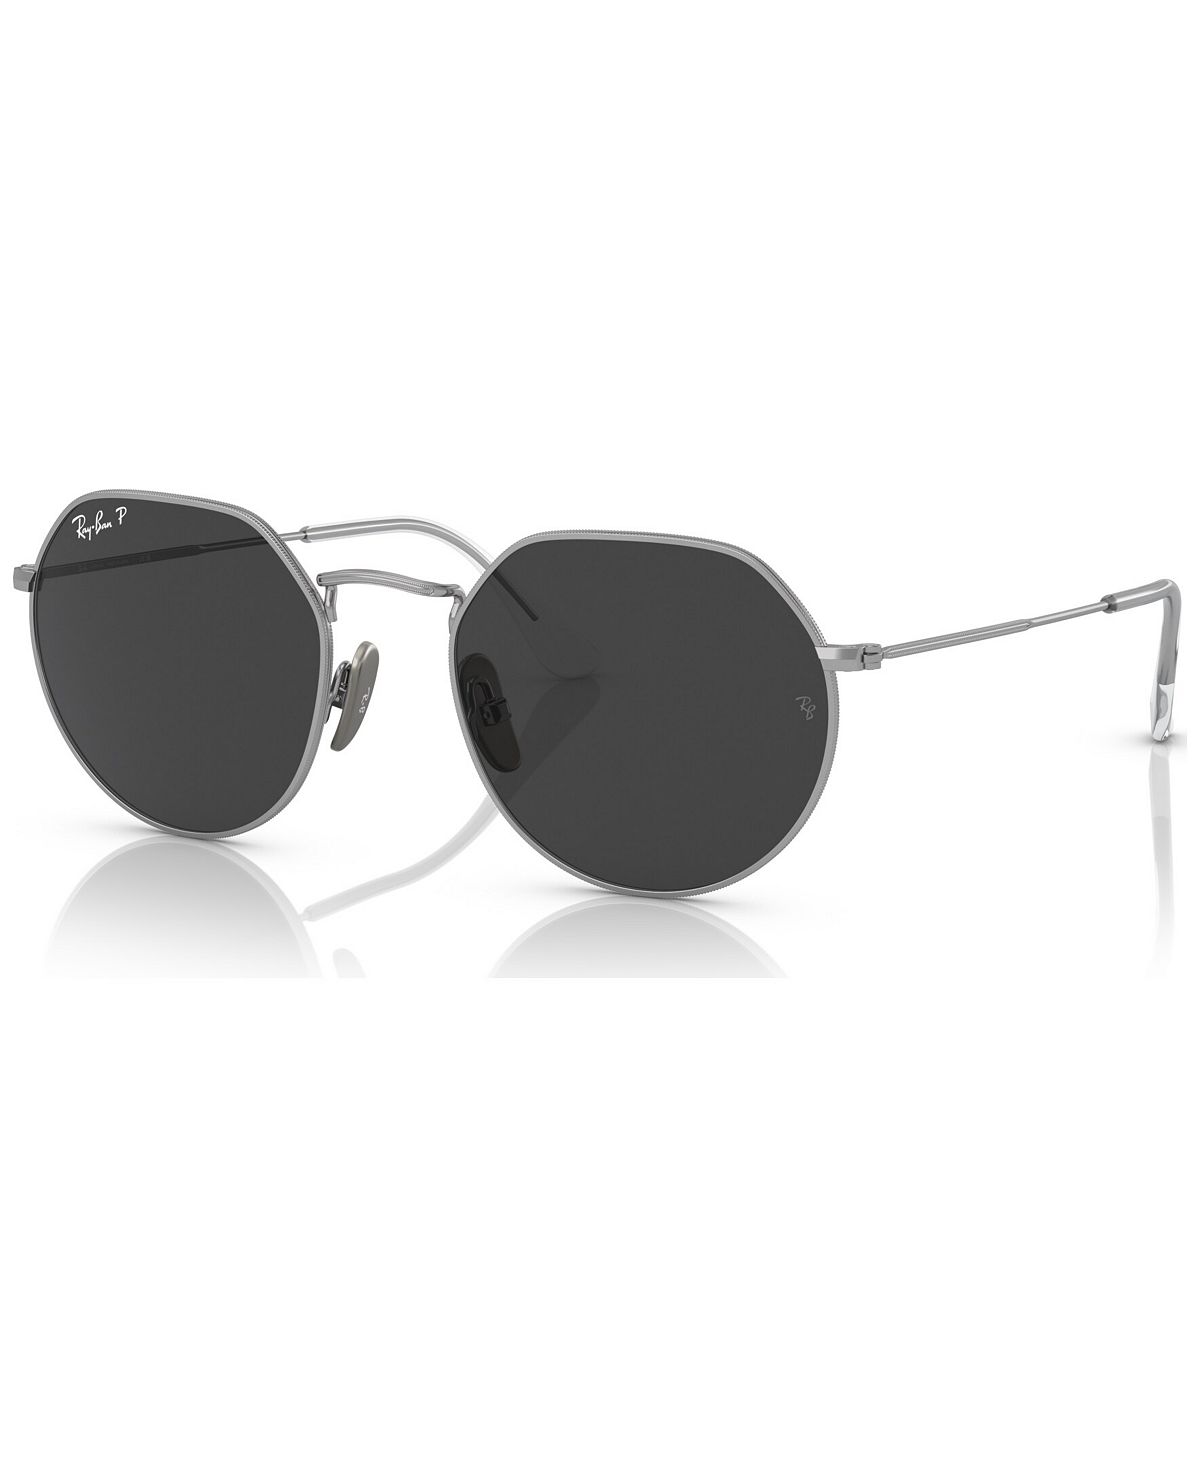 Поляризованные солнцезащитные очки унисекс, rb816551-p Ray-Ban, мульти поляризованные солнцезащитные очки унисекс rb816551 p ray ban